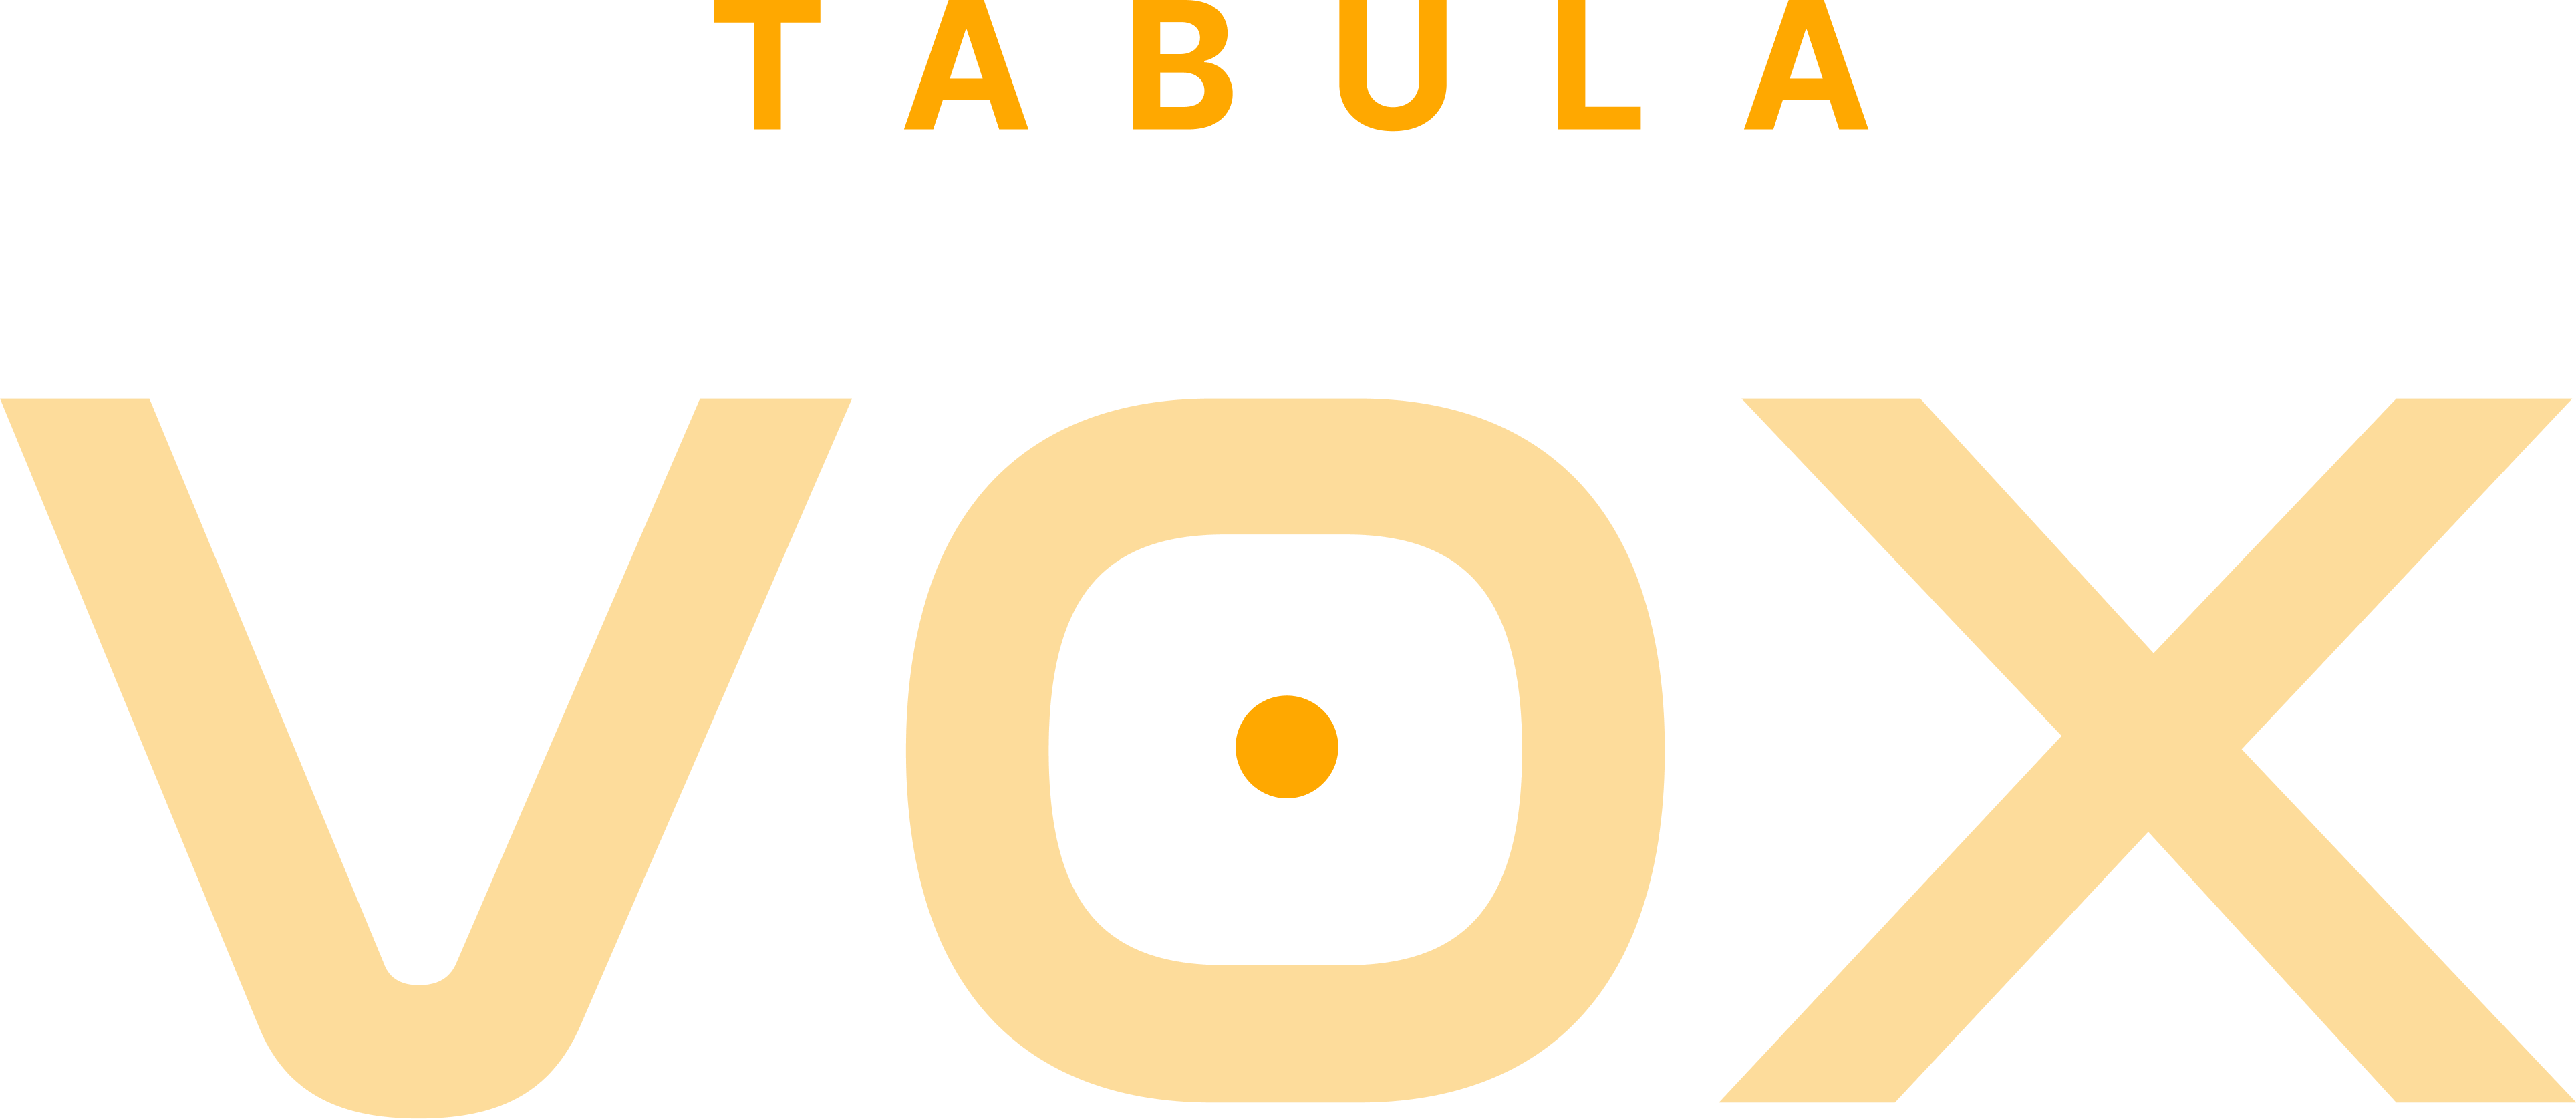 Tabula Vox Logo